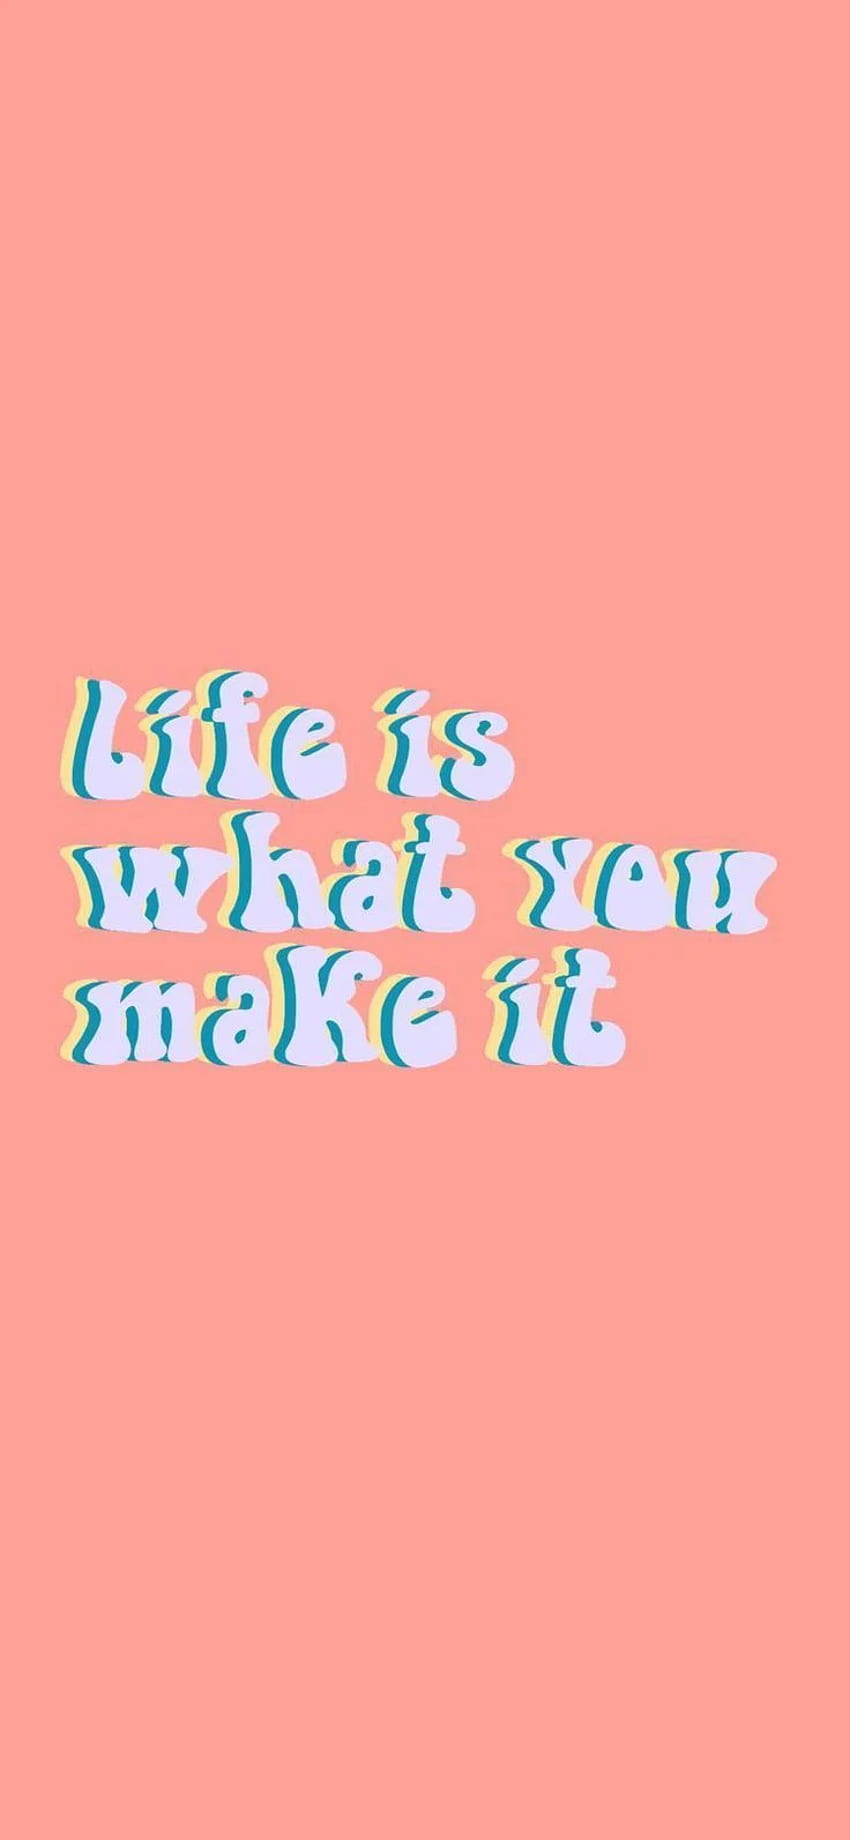 41+] Motivational Life Quotes Wallpapers - WallpaperSafari